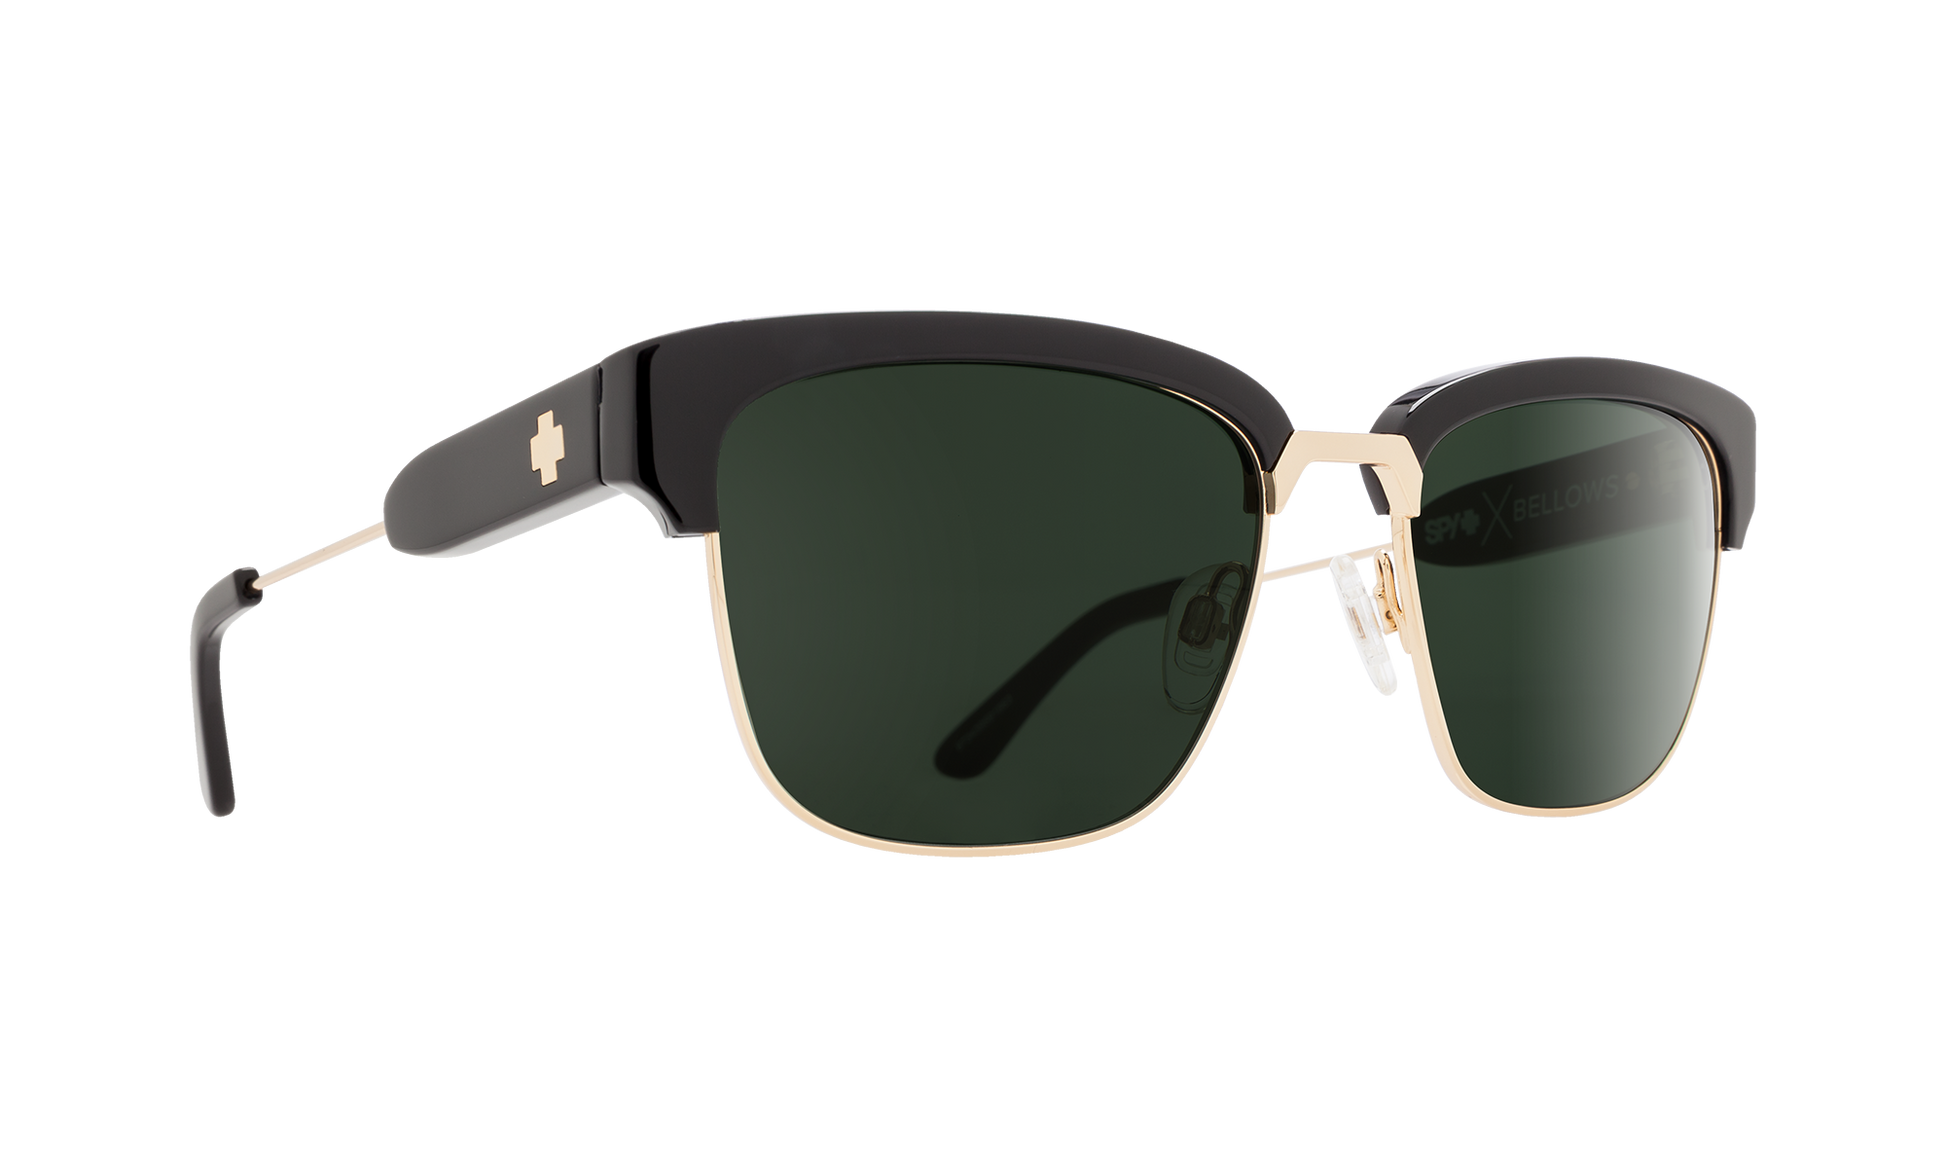 SPY Bellows Sunglasses  Happy Gray Green Black/Gold  55-17-140